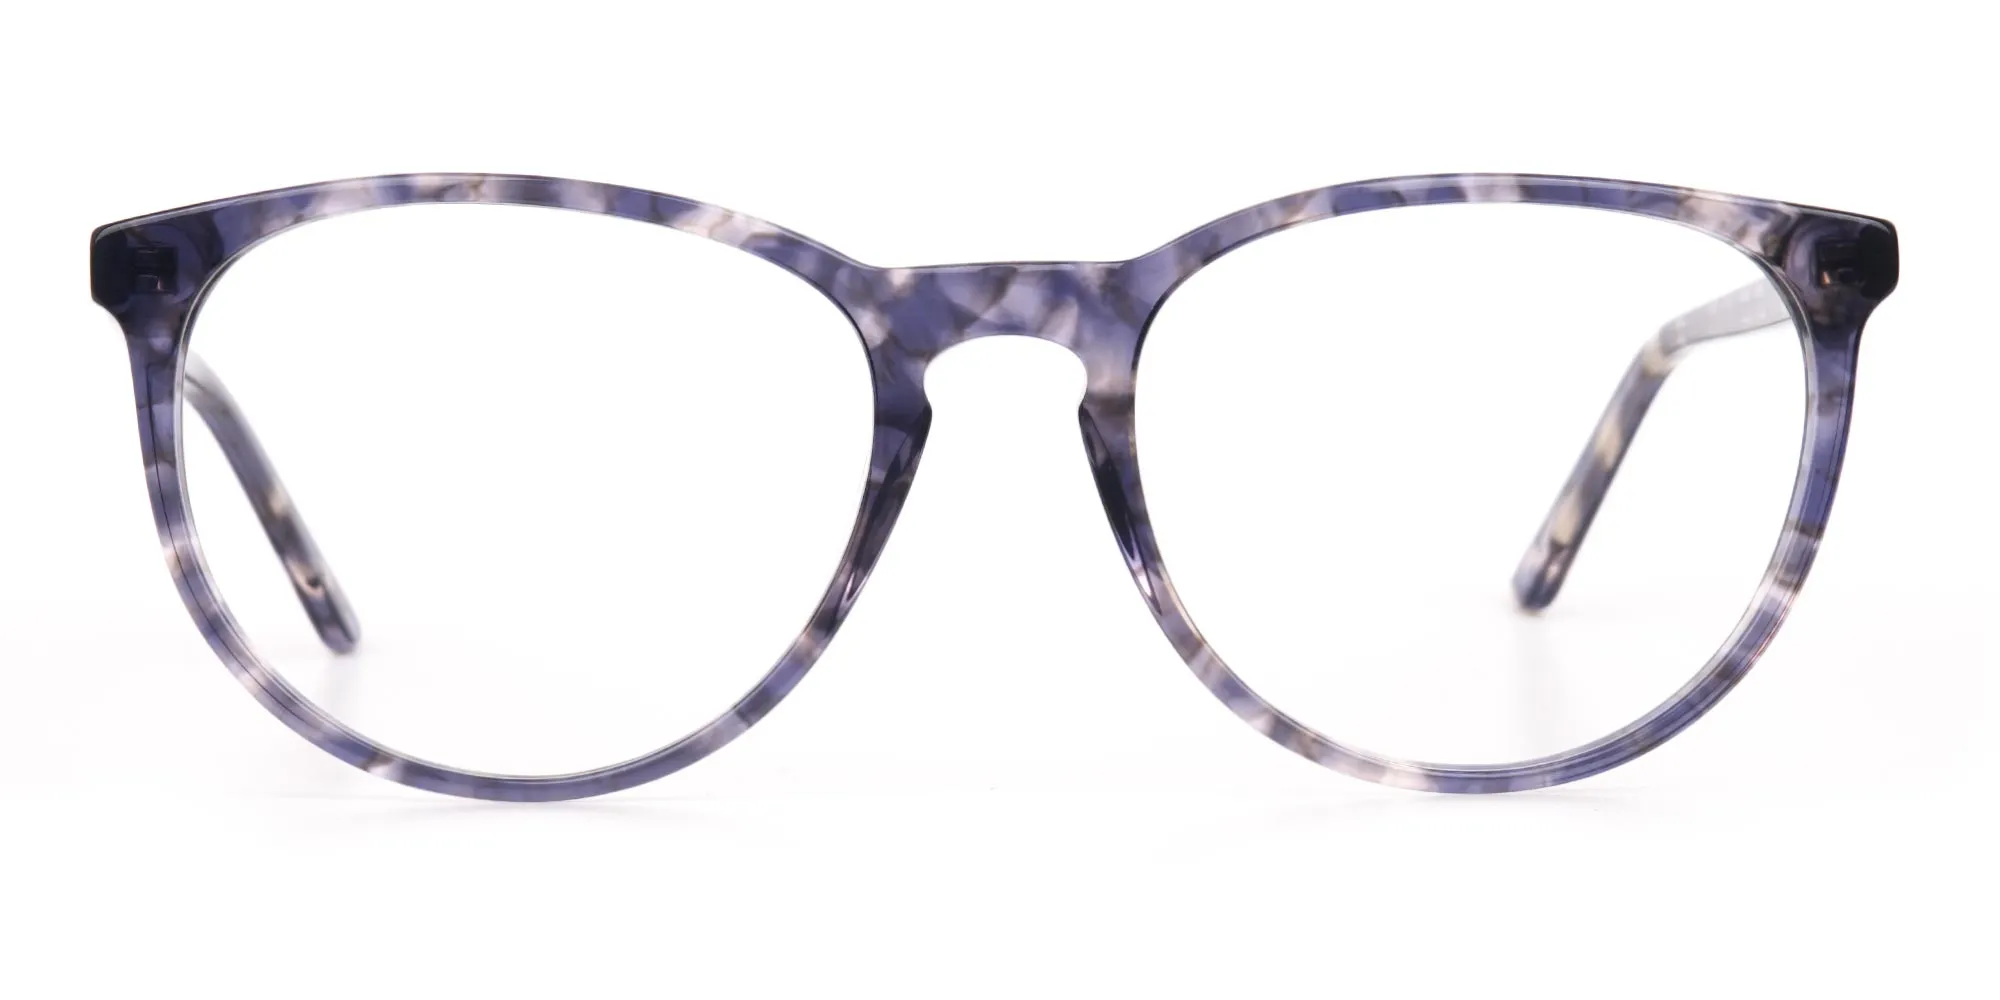 Dusty Blue Tortoise Acetate Round Glasses Frame-2